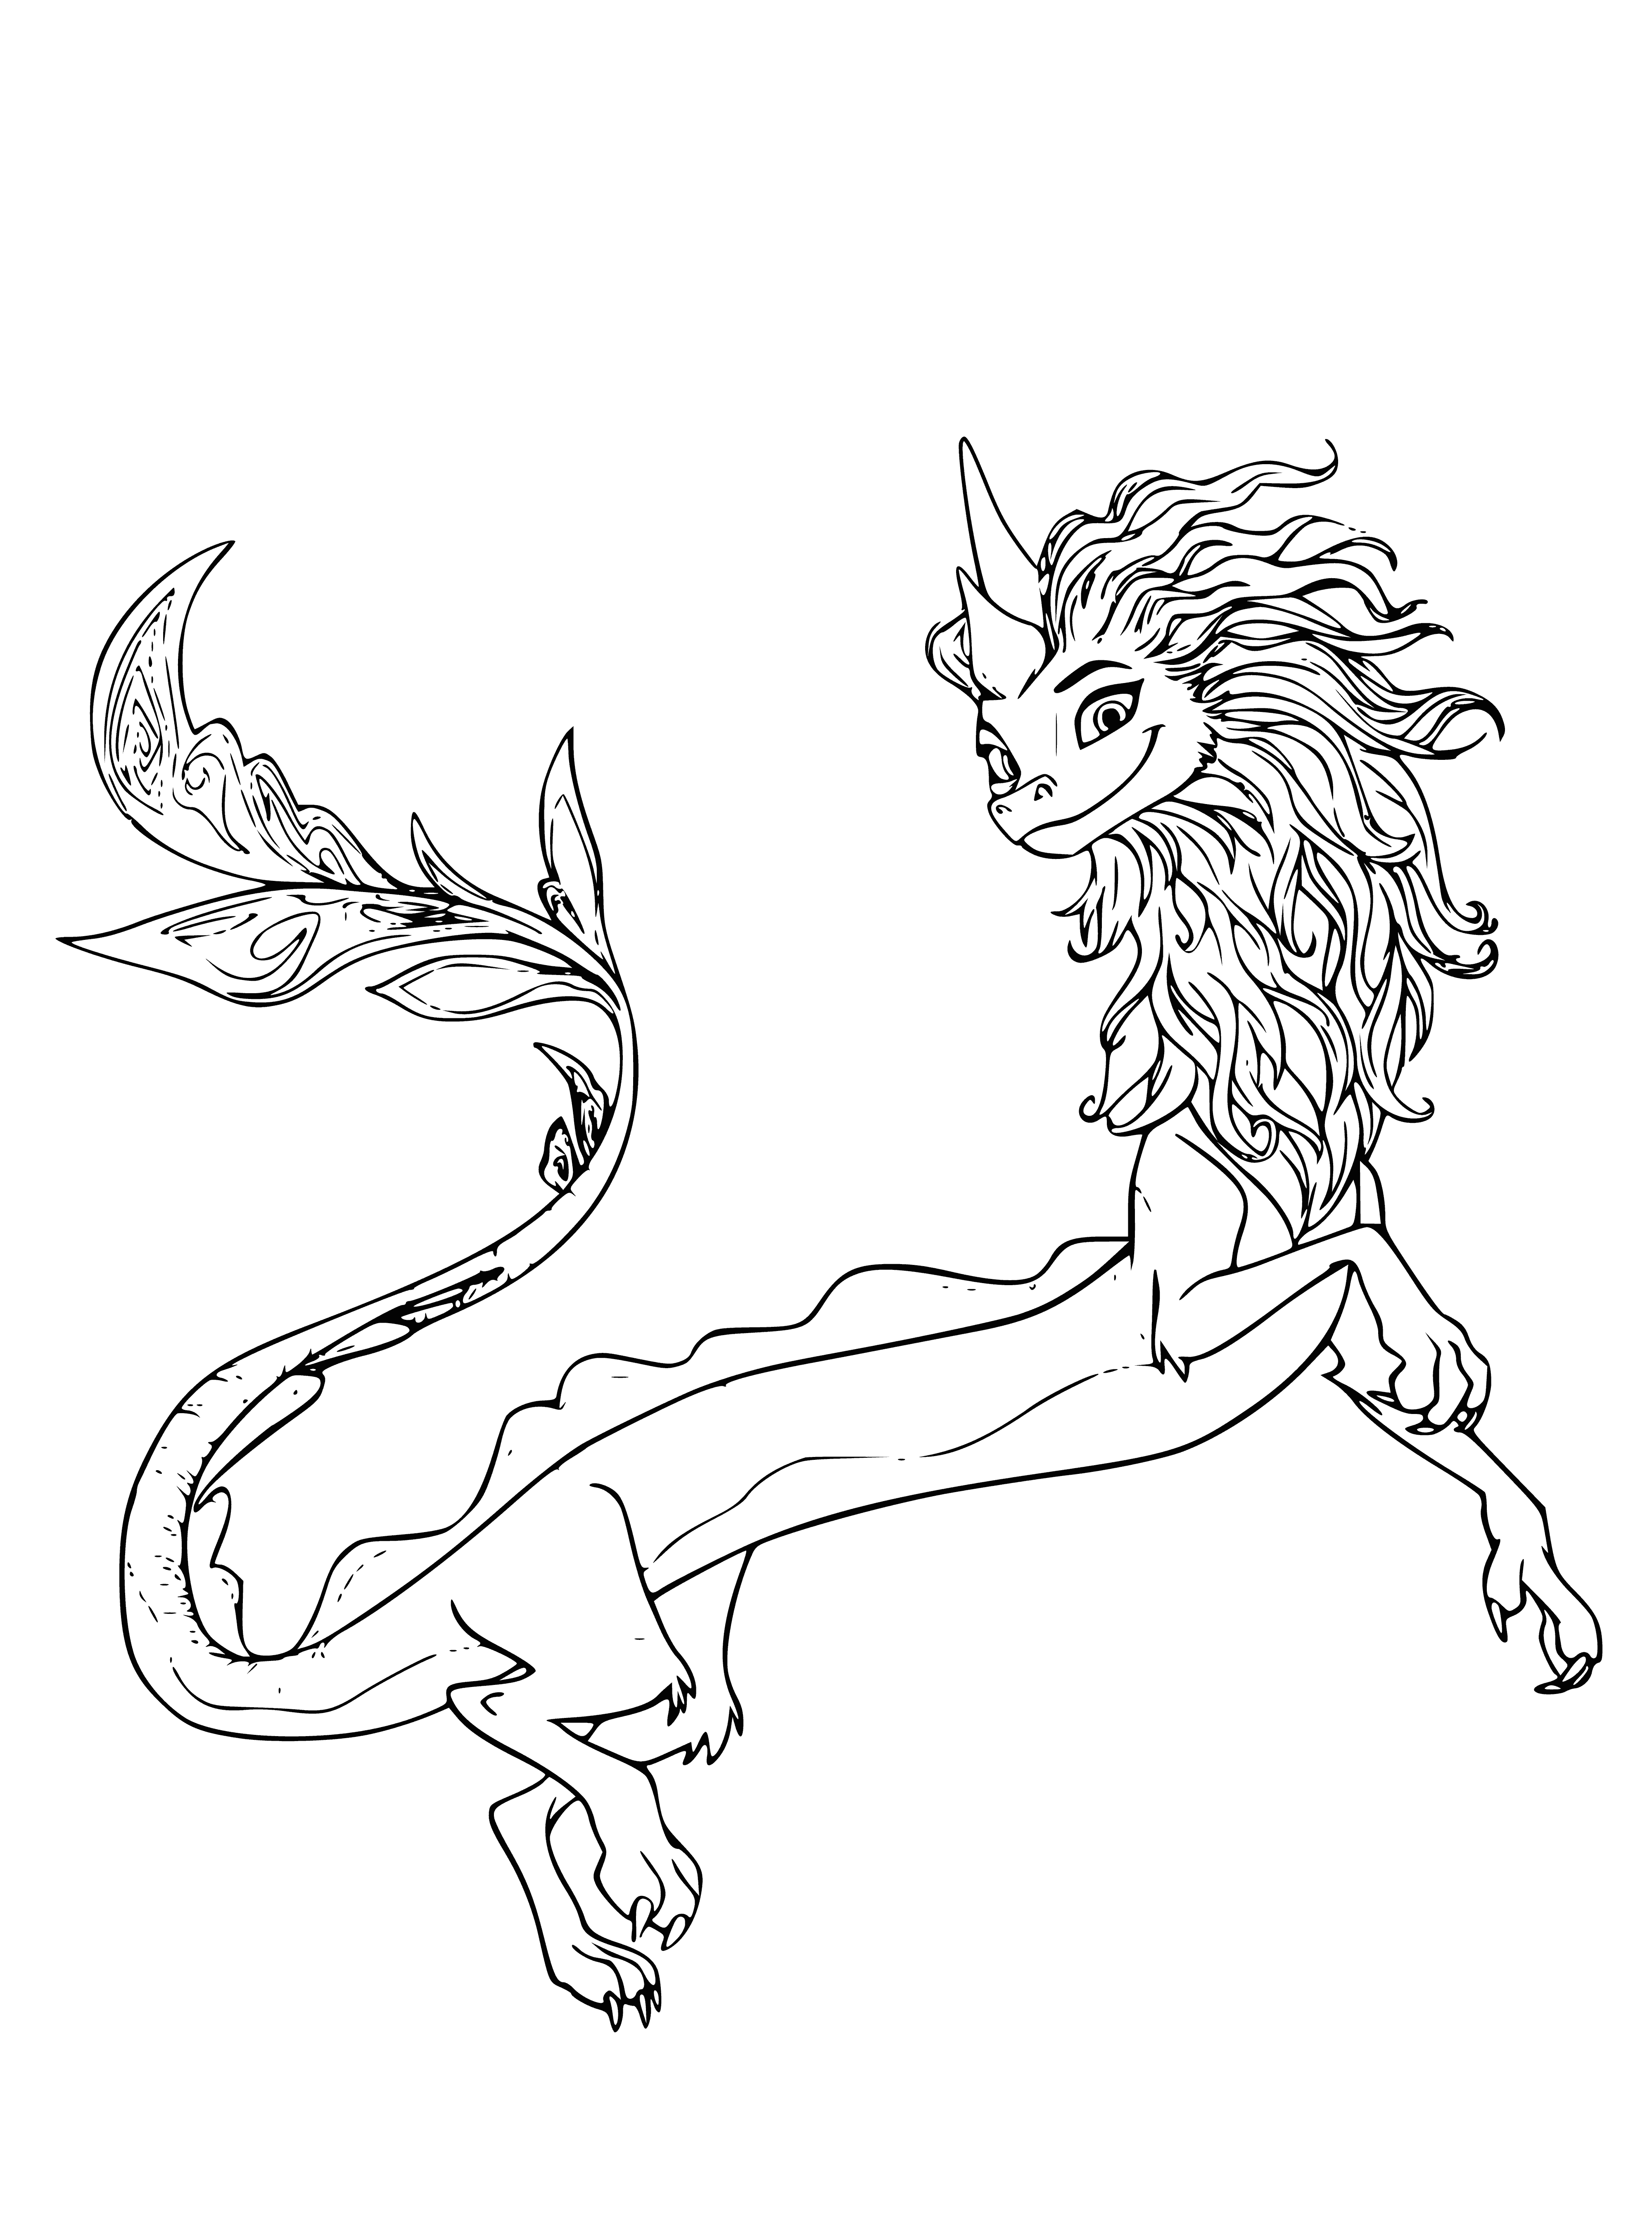 Shisu Water Dragon coloring page